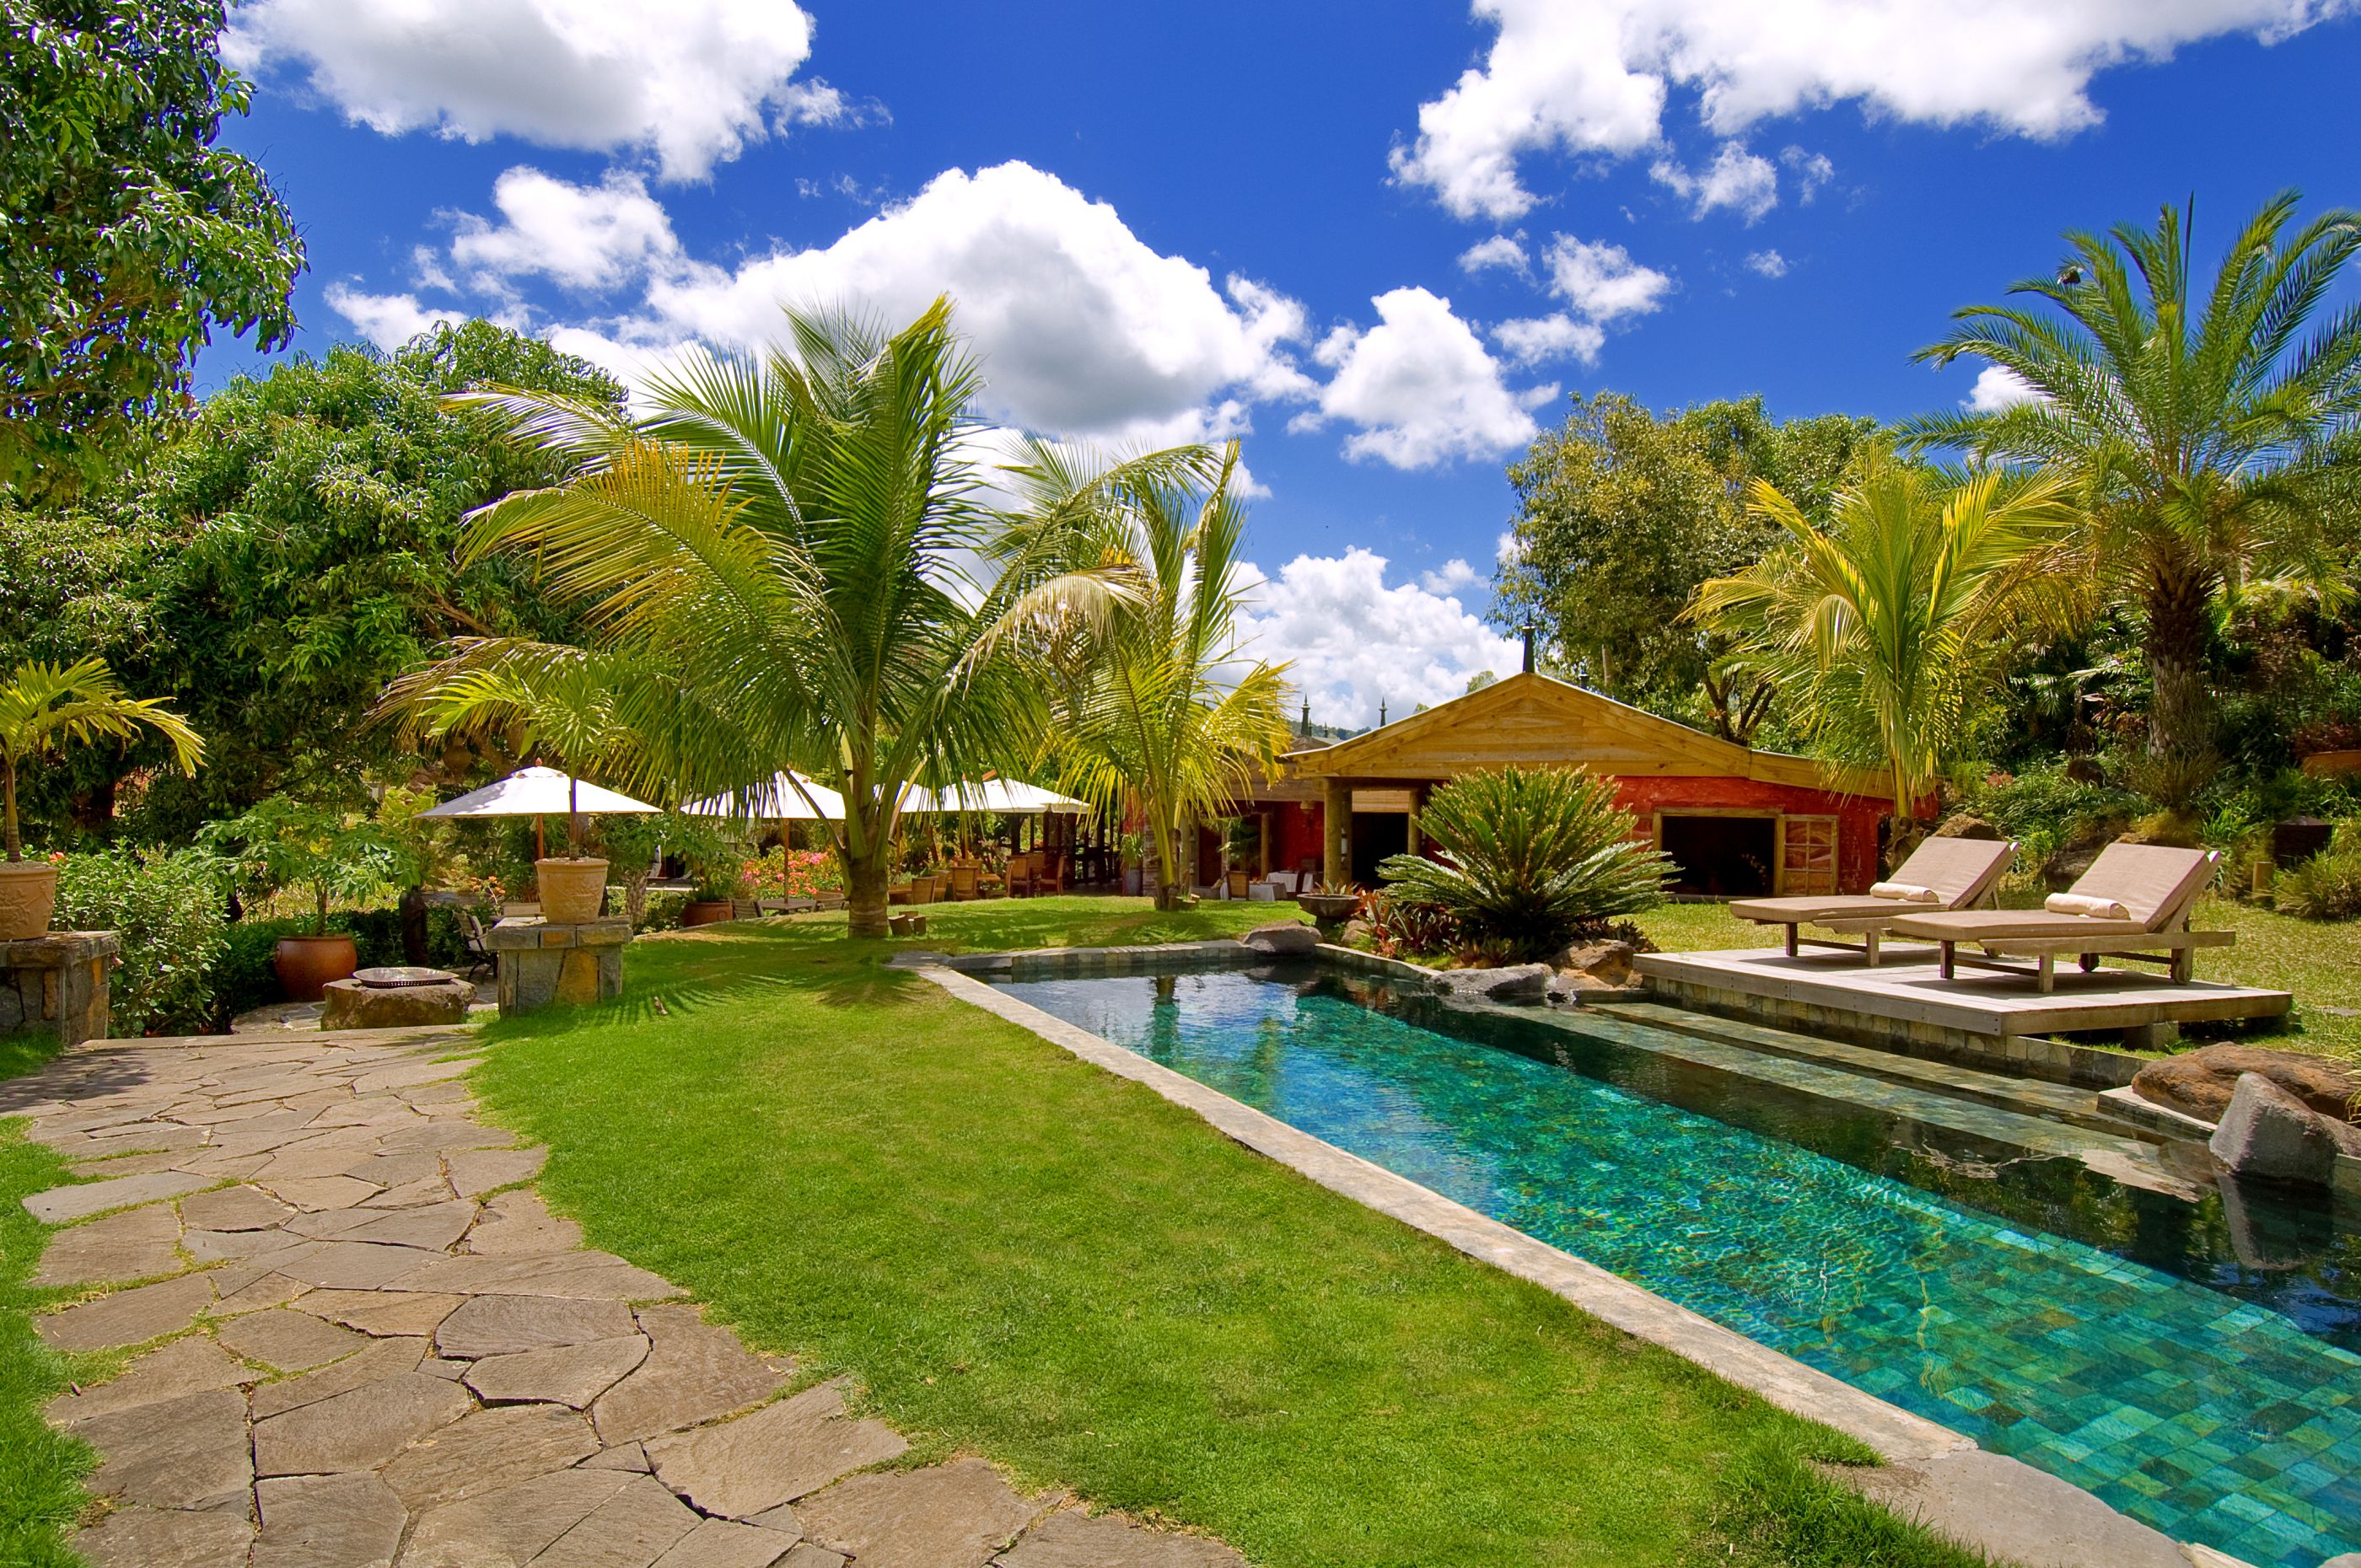 Swimming pool at Lakaz Chamarel, Mauritius